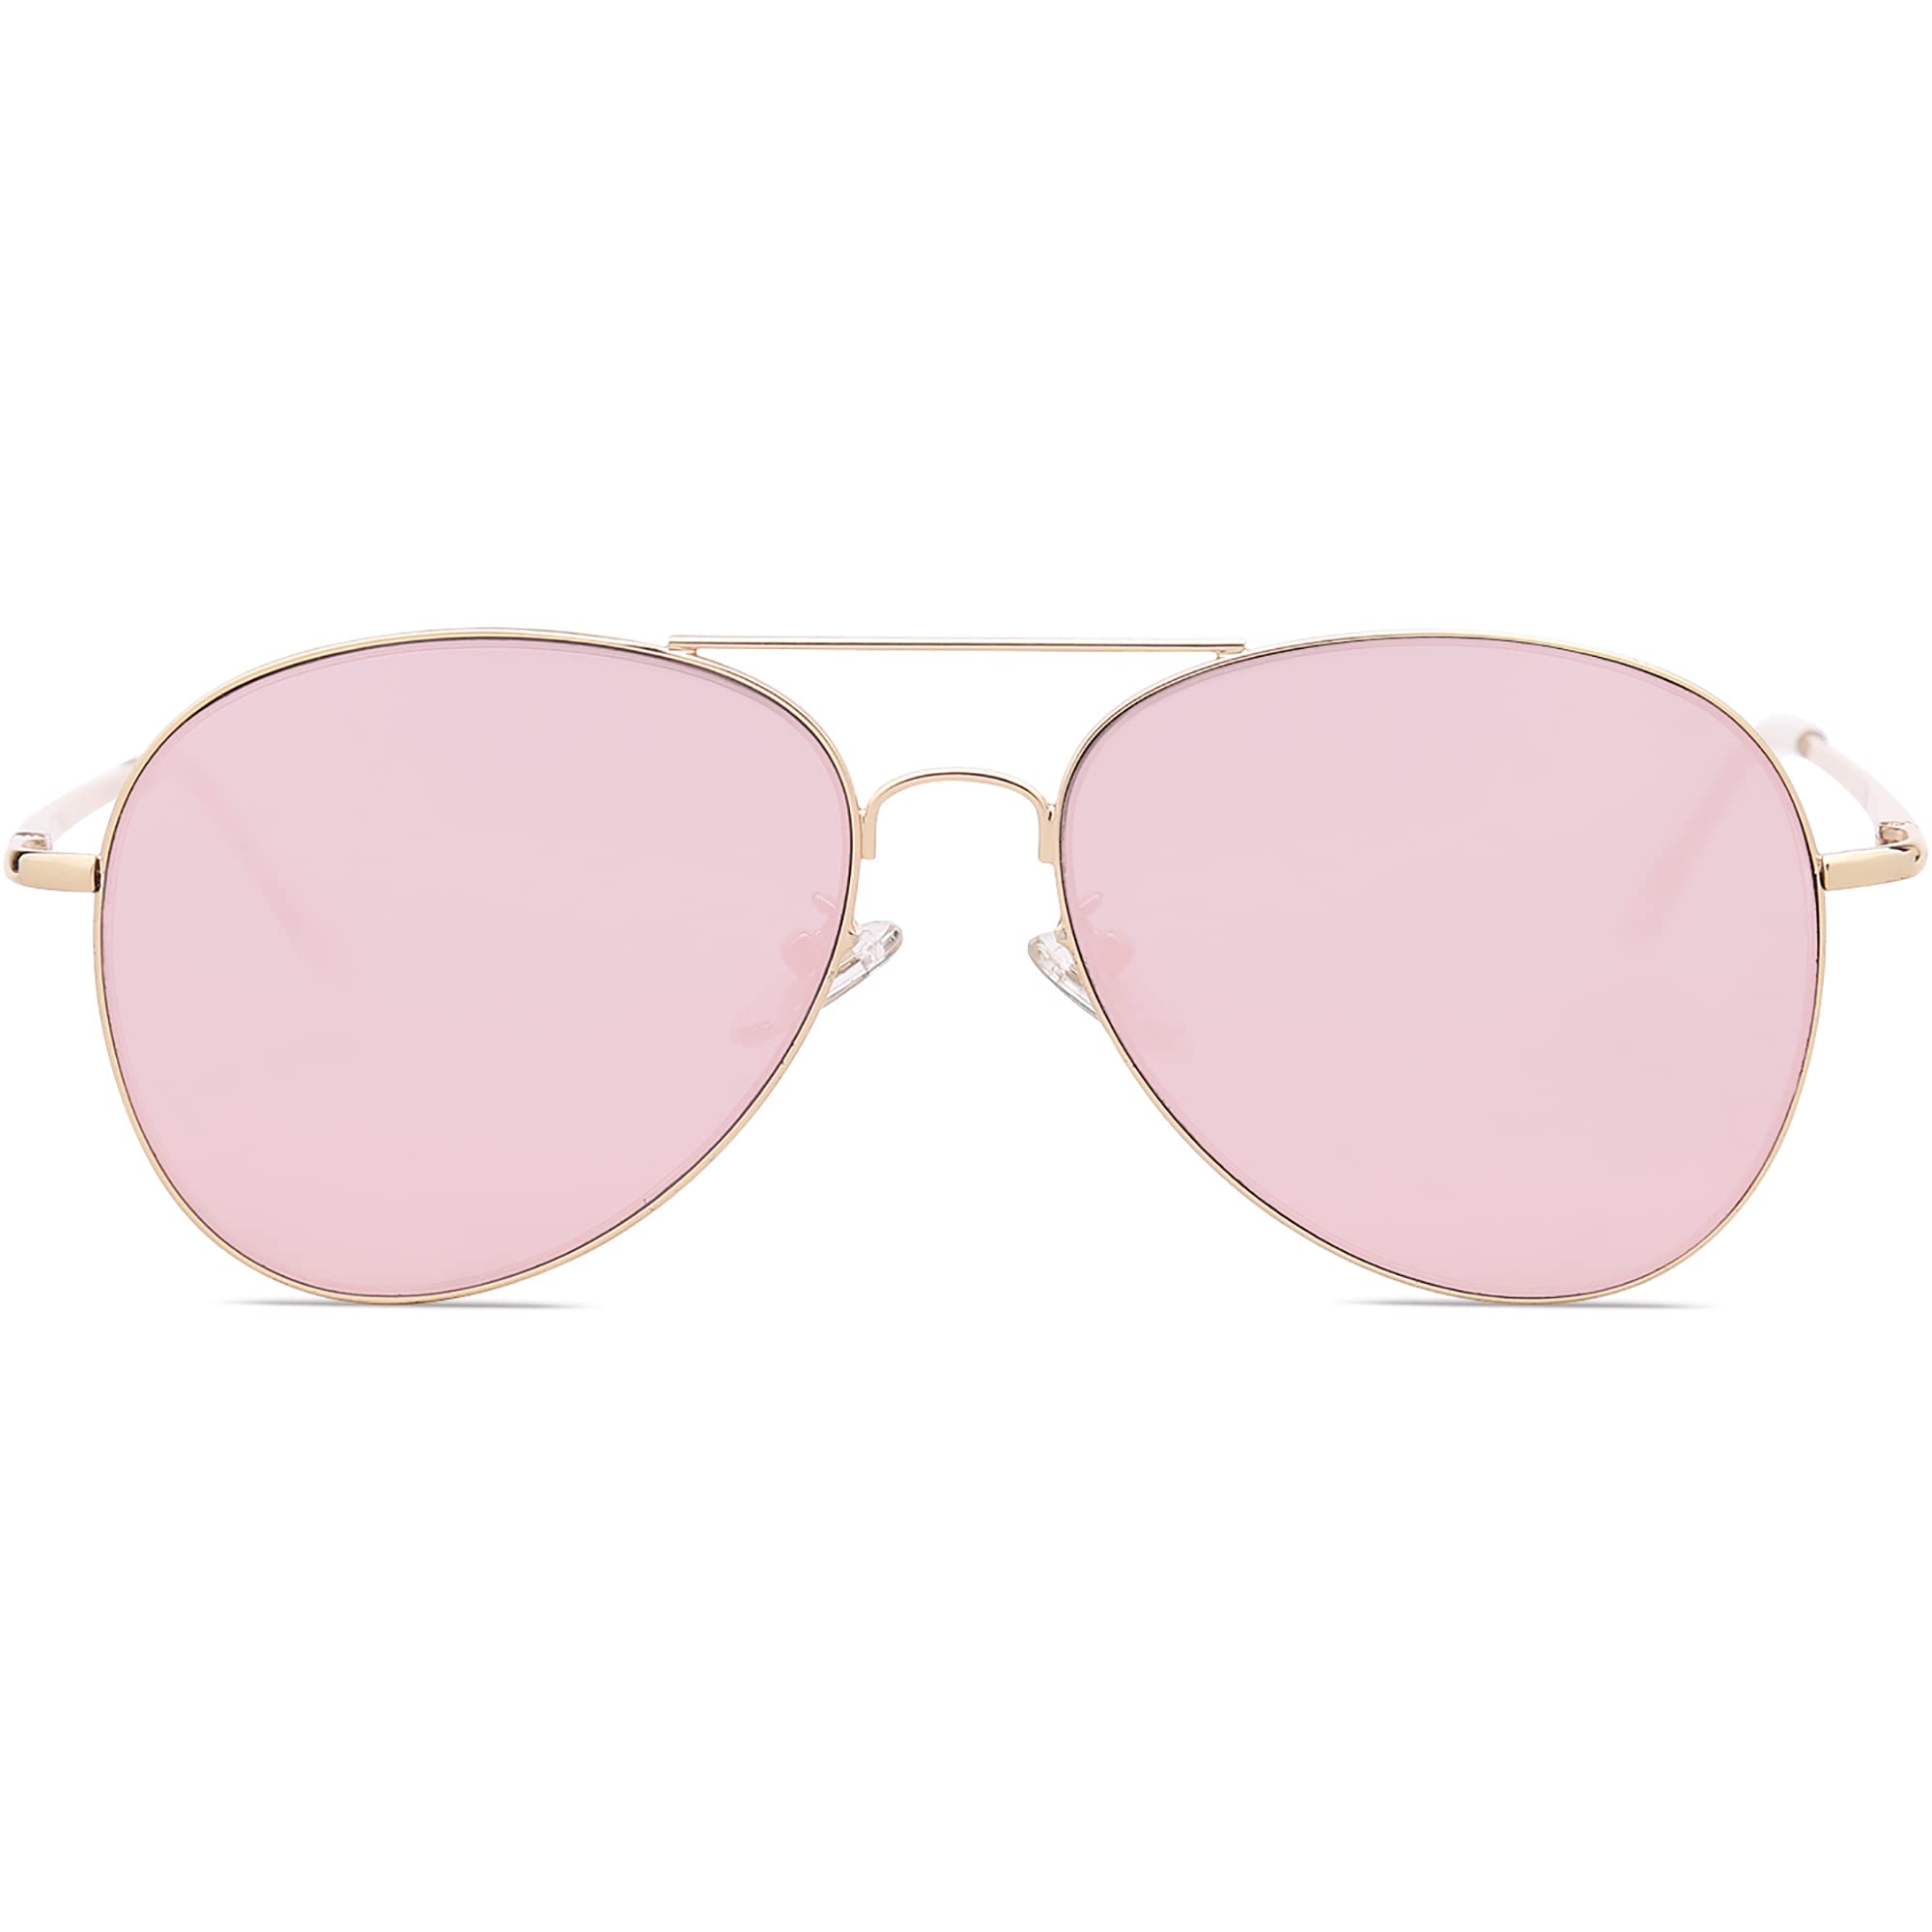 SOJOS Trendy Aviator Sunglasses for Women and Men